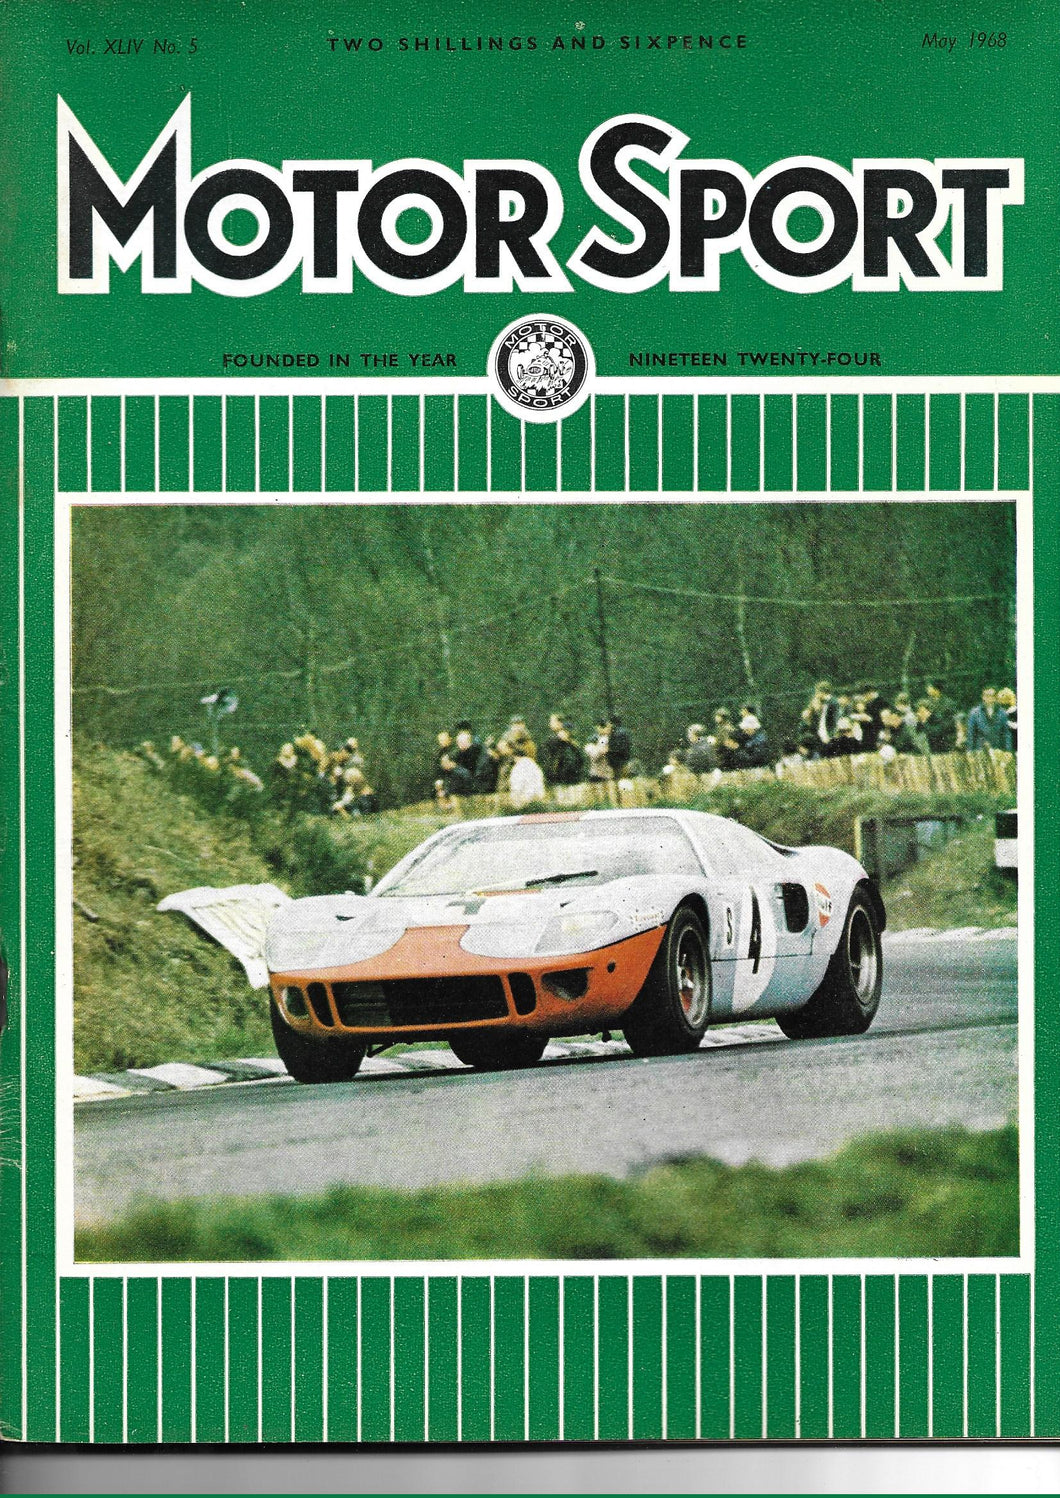 Motor Sport Magazine VOL XLIV No. 5 May 1968